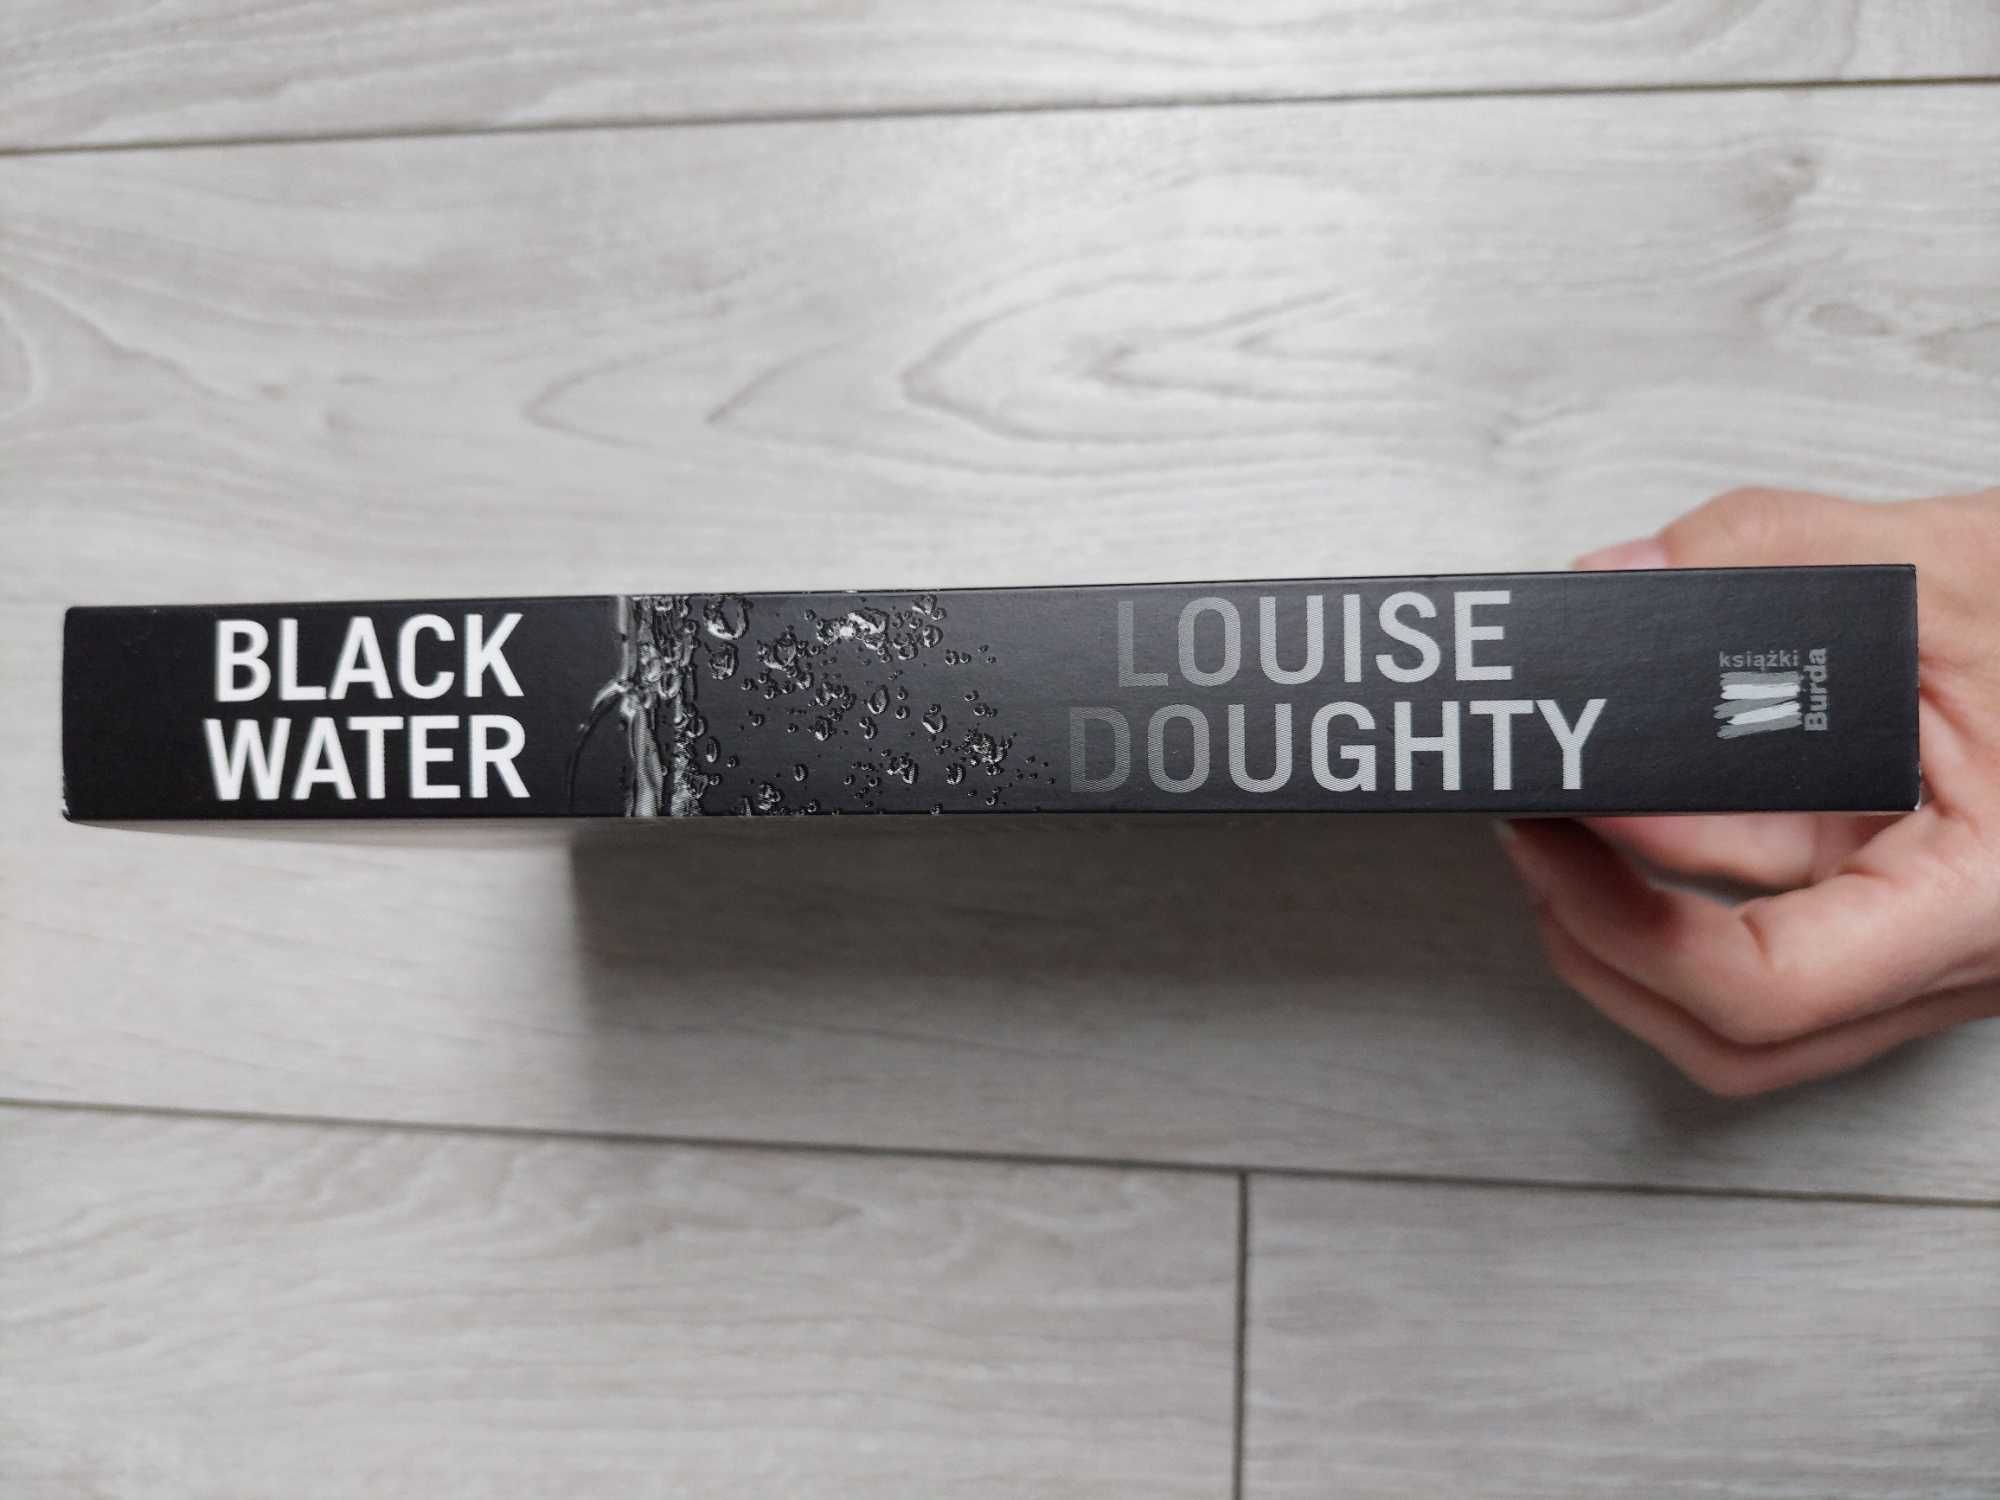 Black Water - Doughty Louise - kryminał, sensacja, thriller